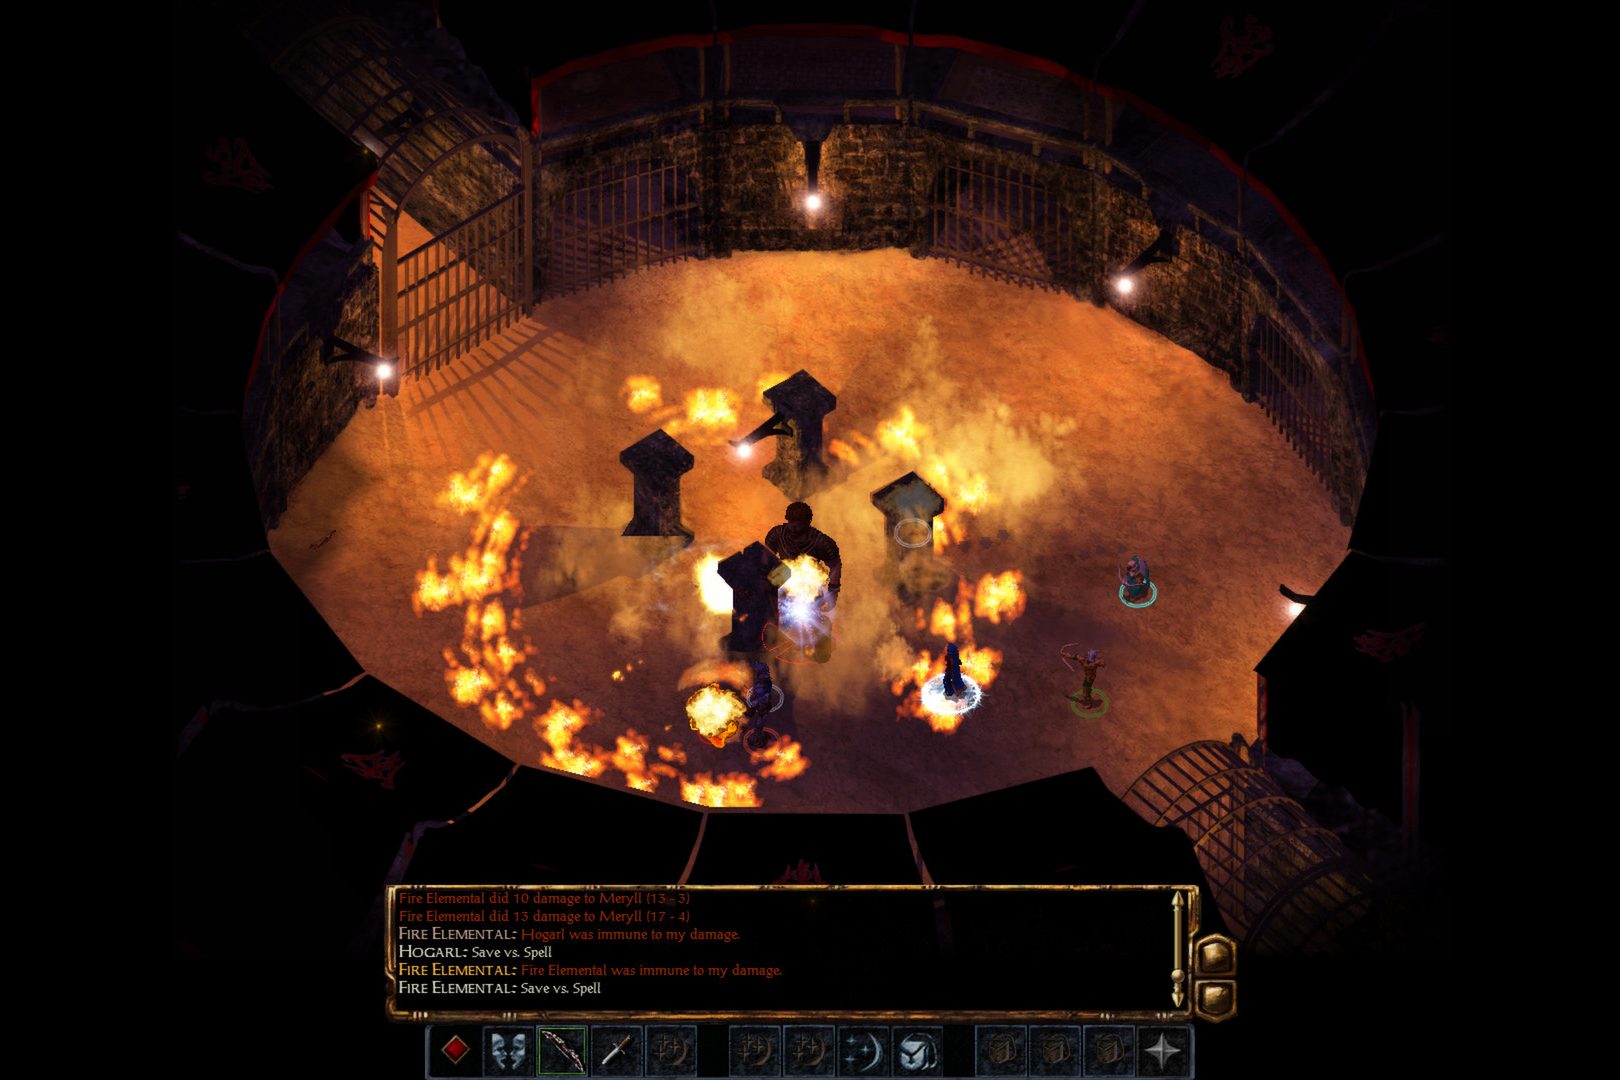 Baldur's Gate: video game adaptation